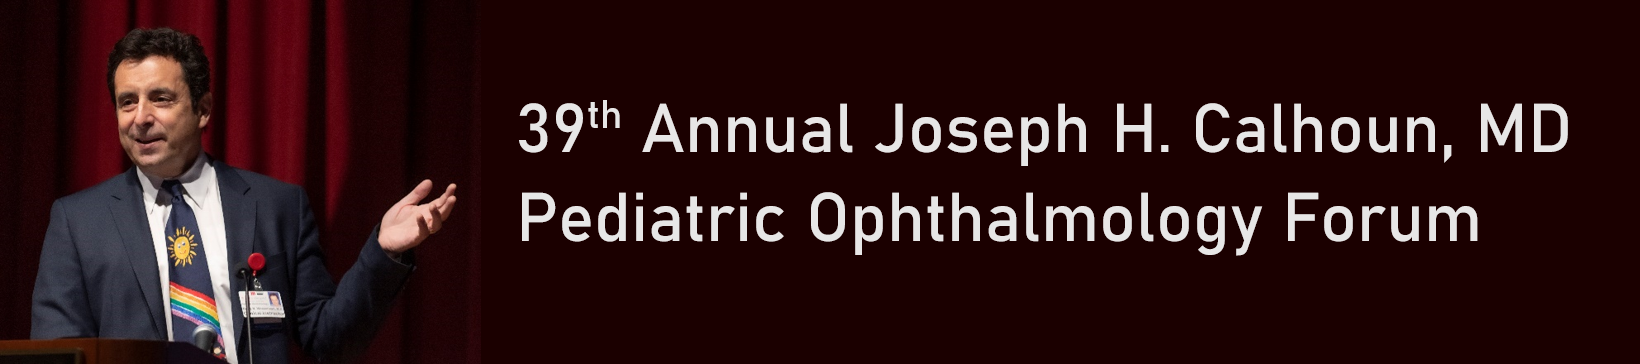 39th Annual Joseph H. Calhoun, MD Pediatric Ophthalmology Forum Banner